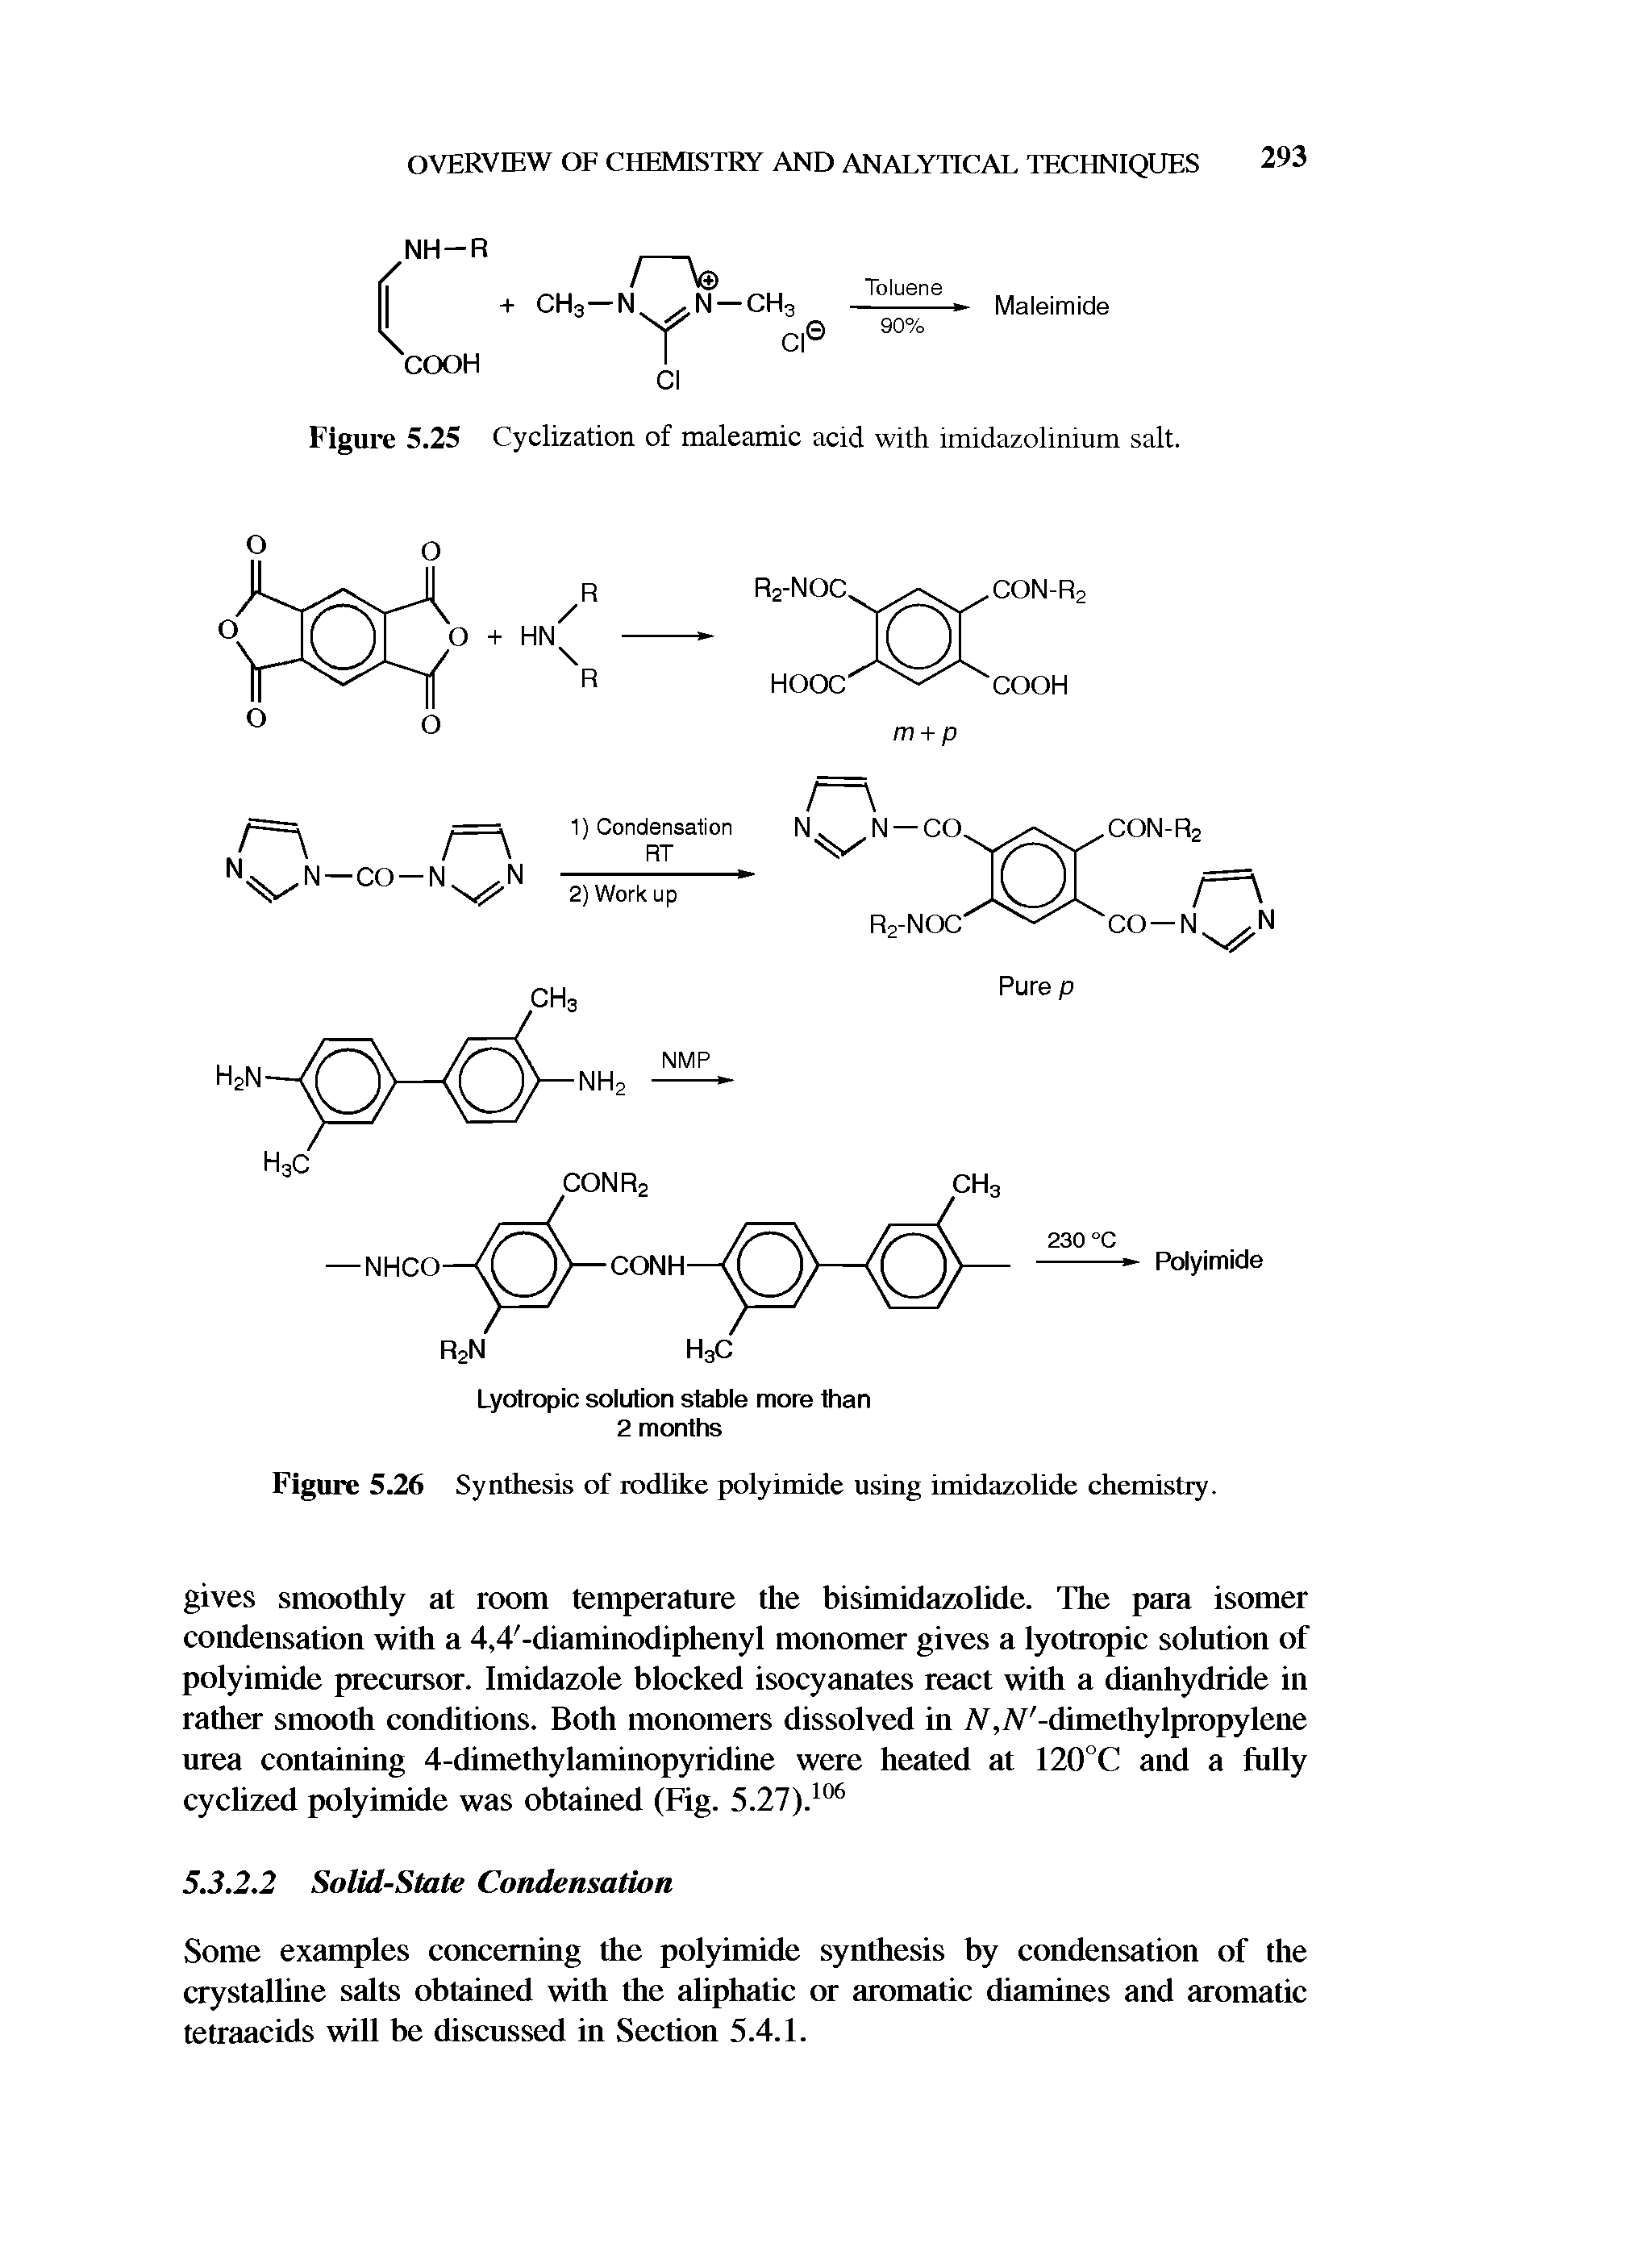 Figure 5.25 Cyclization of maleamic acid with imidazolinium salt.